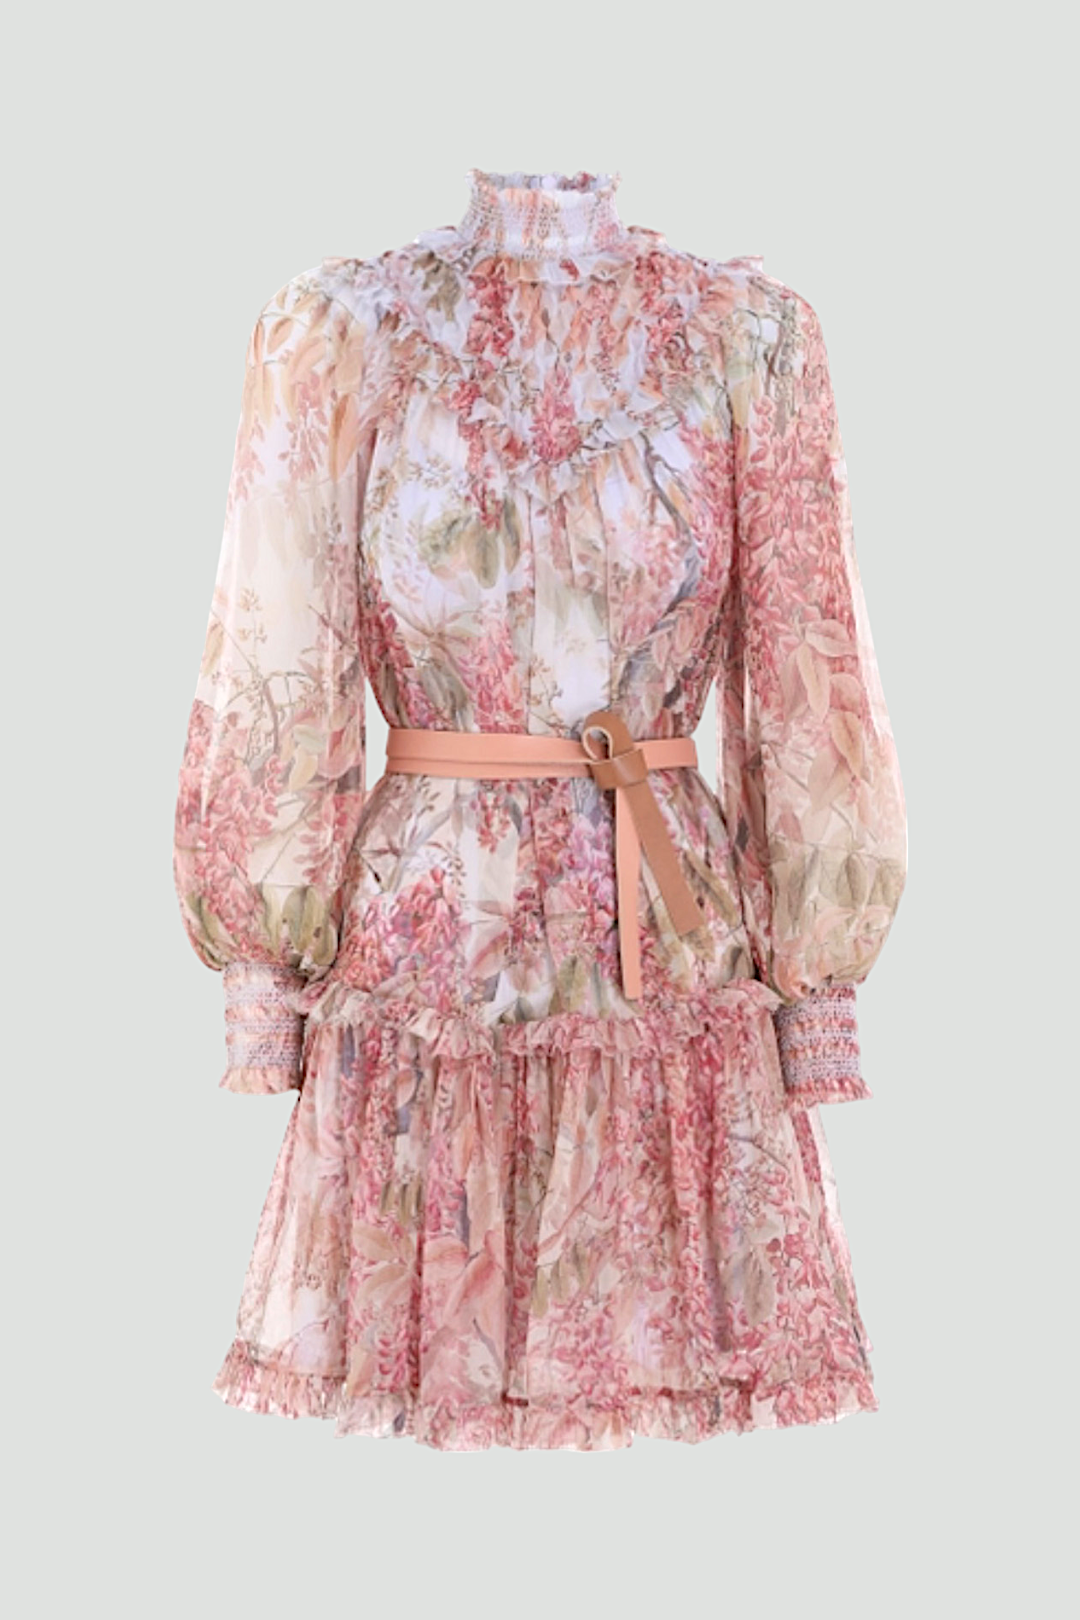 Zimmermann in Botanica Smocked Yoke Mini Dress in Pink